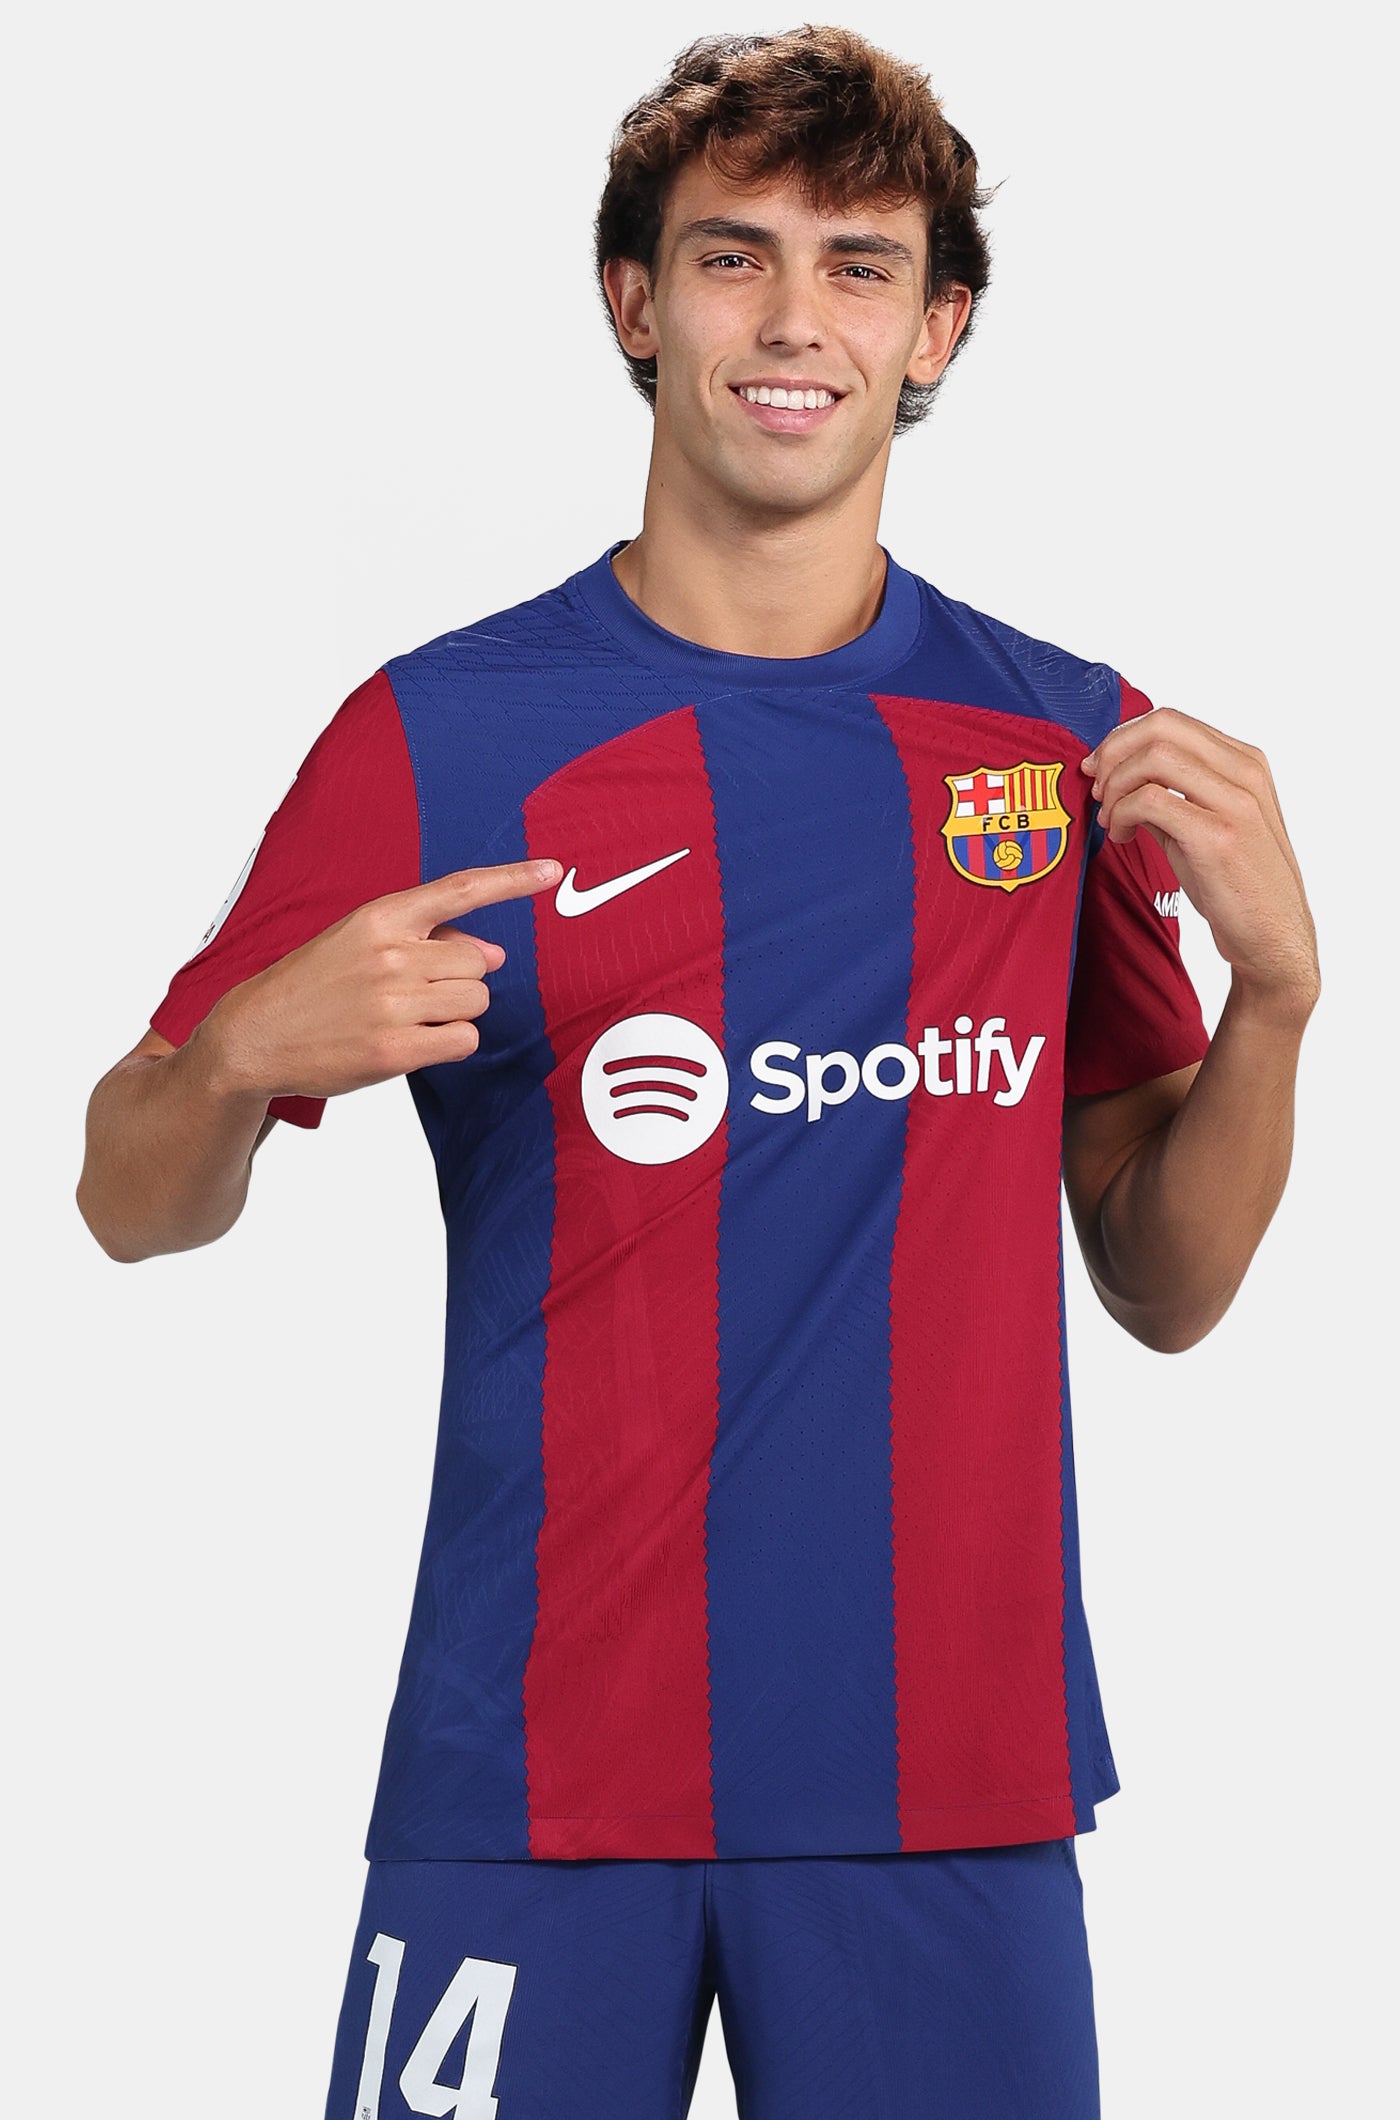 UCL FC Barcelona home shirt 23/24 Player's Edition  - JOÃO FÉLIX